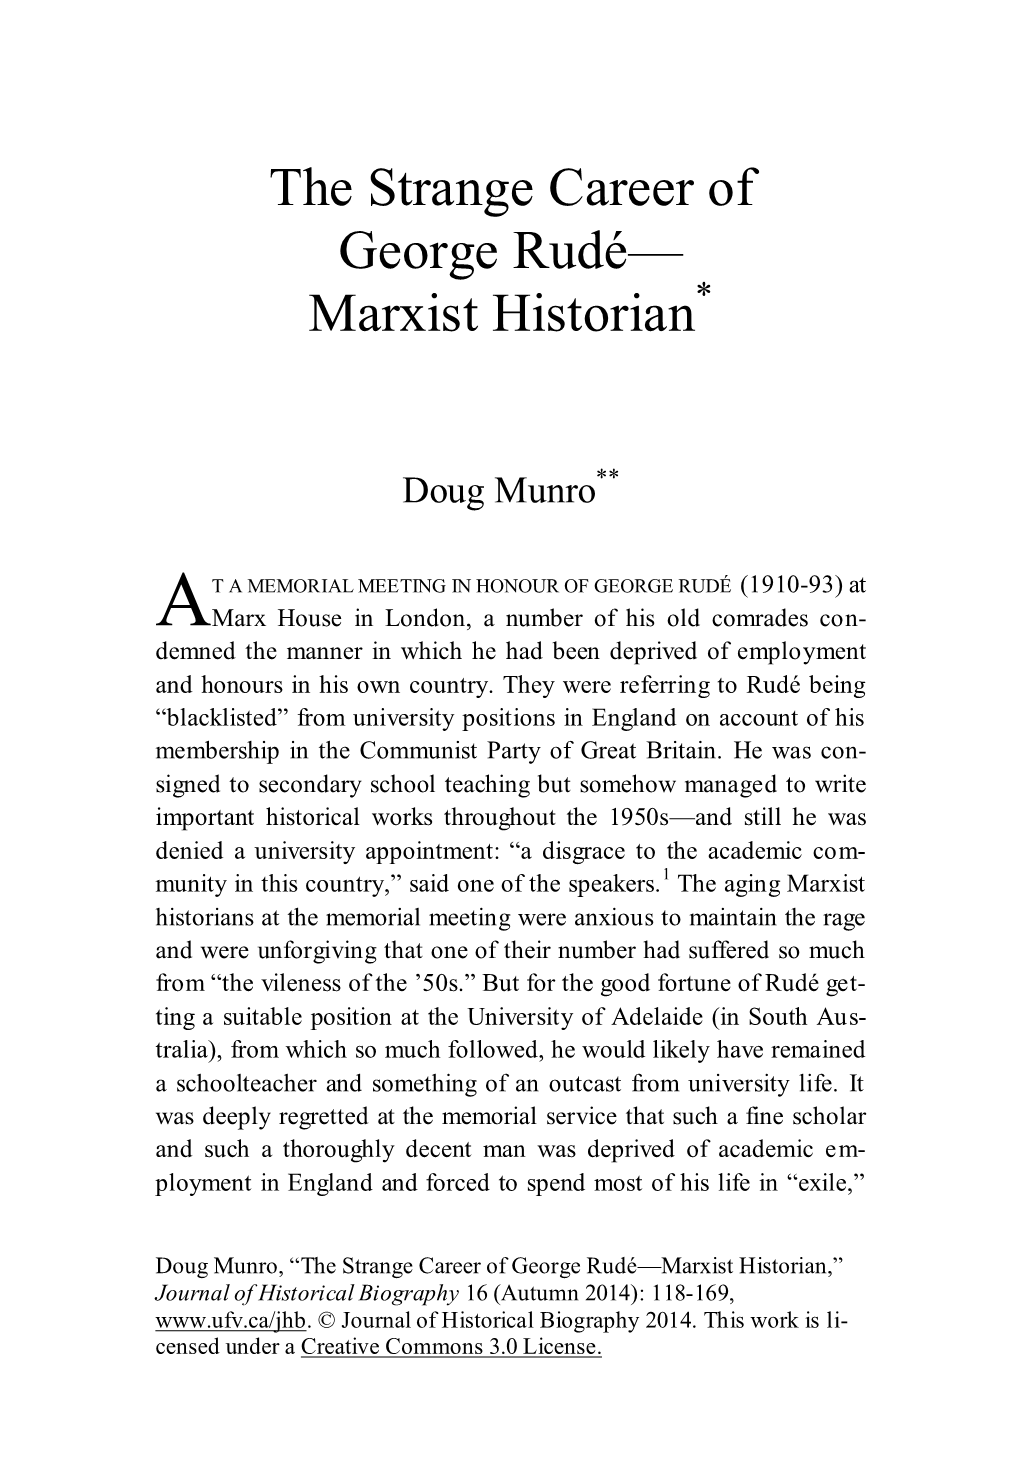 The Strange Career of George Rudé— Marxist Historian*